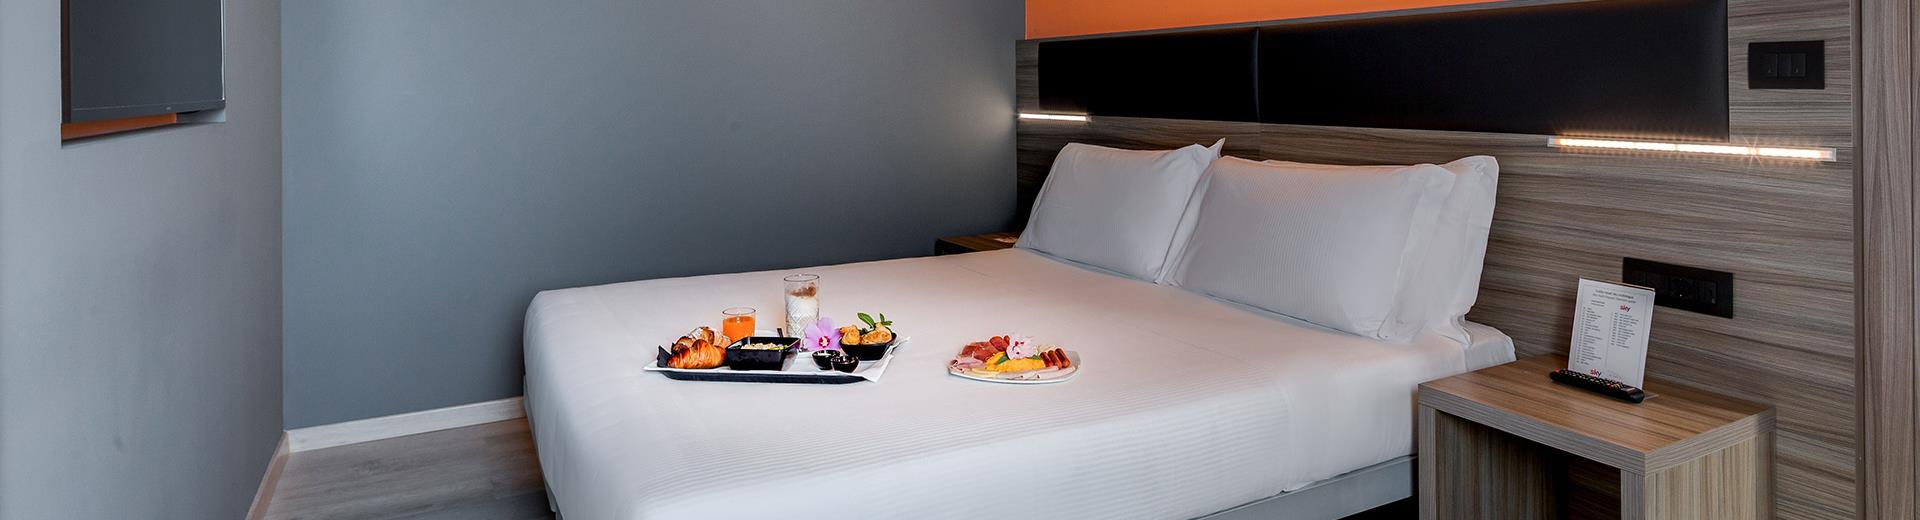 Comfort e servizi nelle camere del Best Western Hotel Aries 4 stelle